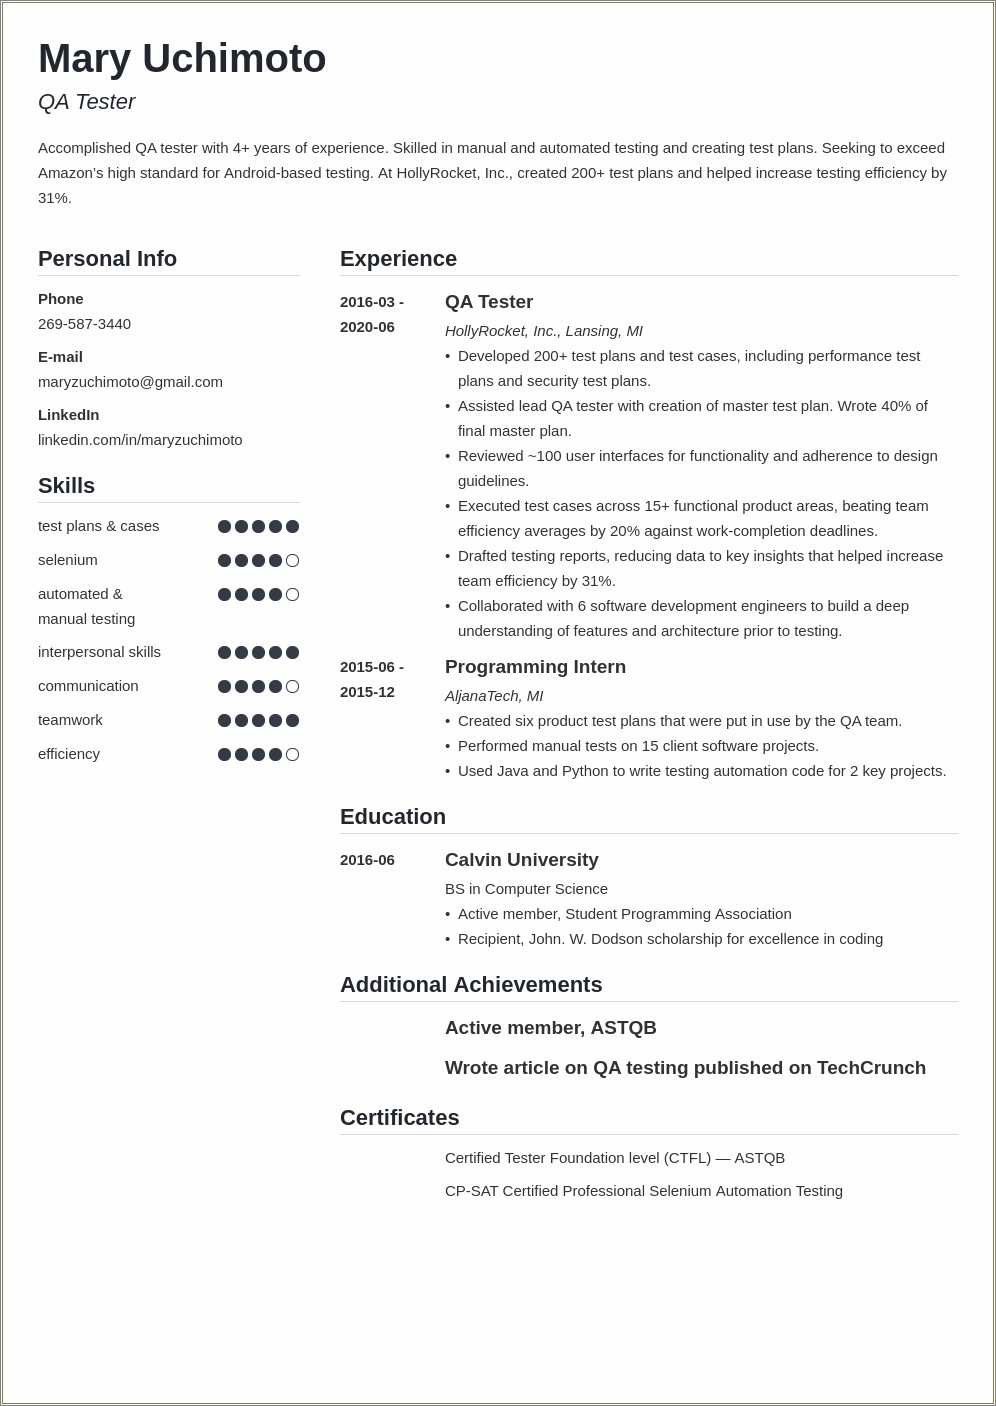 Sample Resume For Experienced Test Engineer Pdf